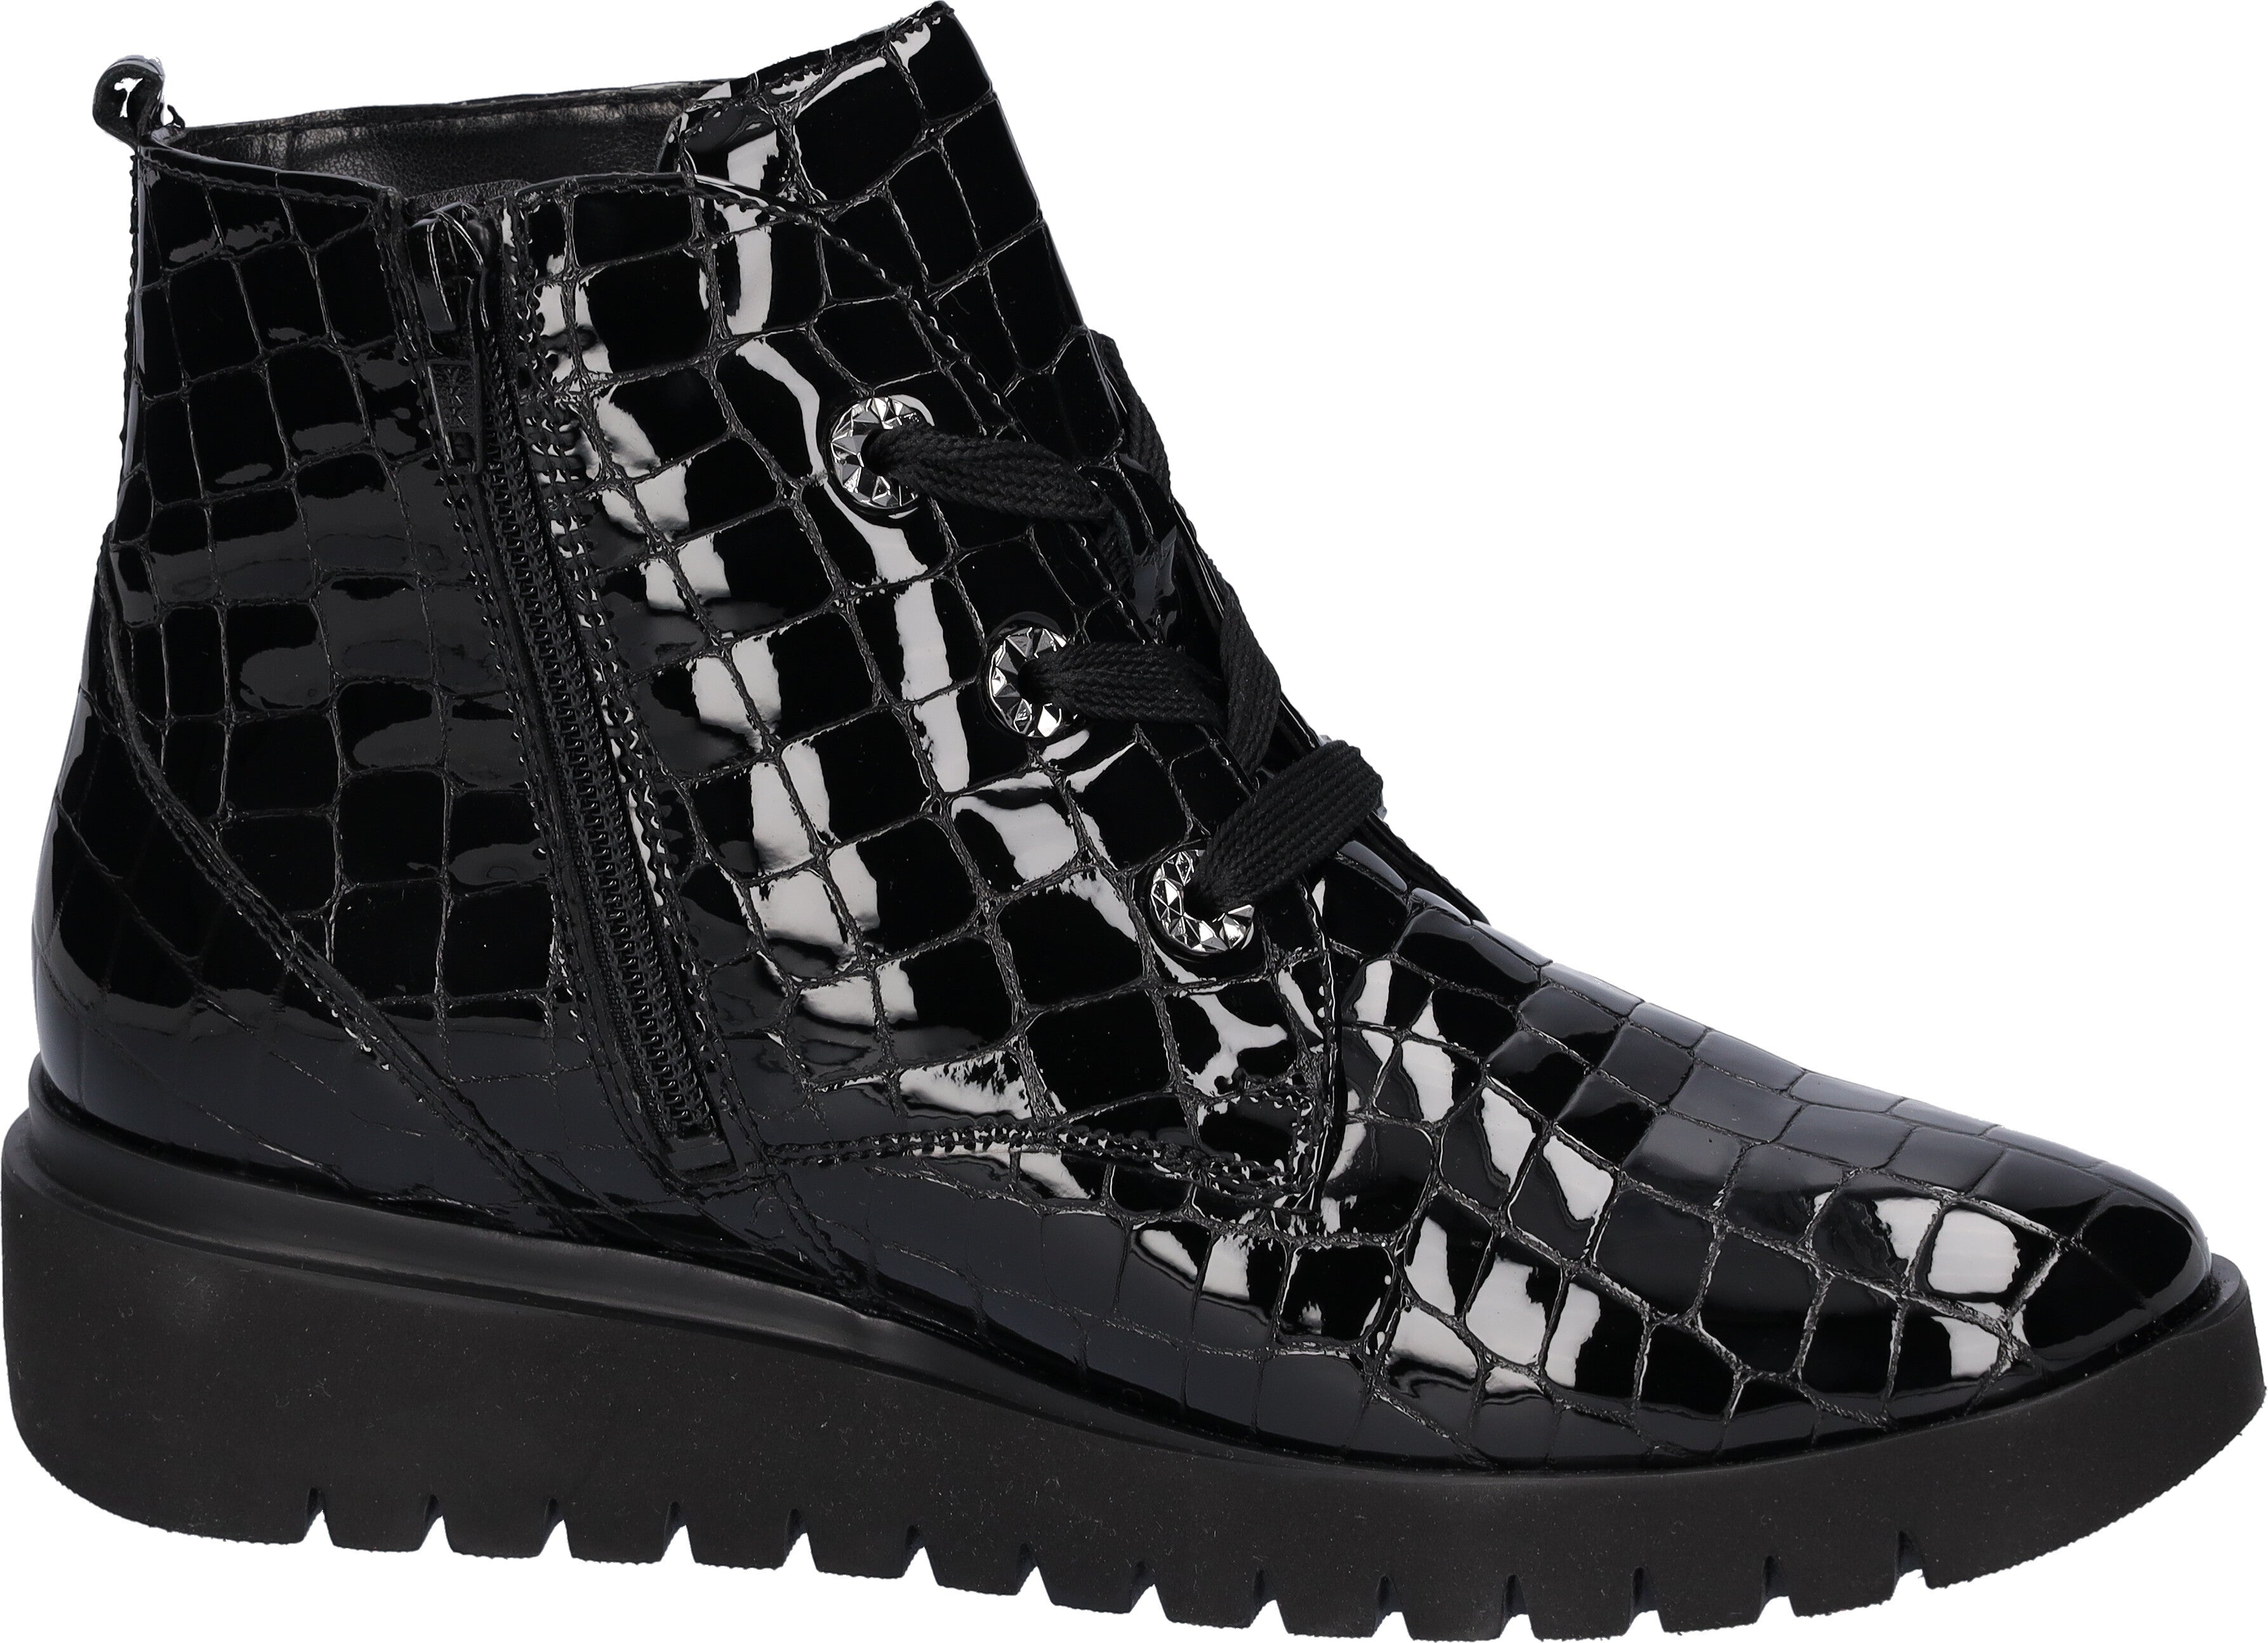 Waldlaufer 711801 150 001 H-Florenz Ladies Black Croc Patent Leather Lace Up Ankle Boots